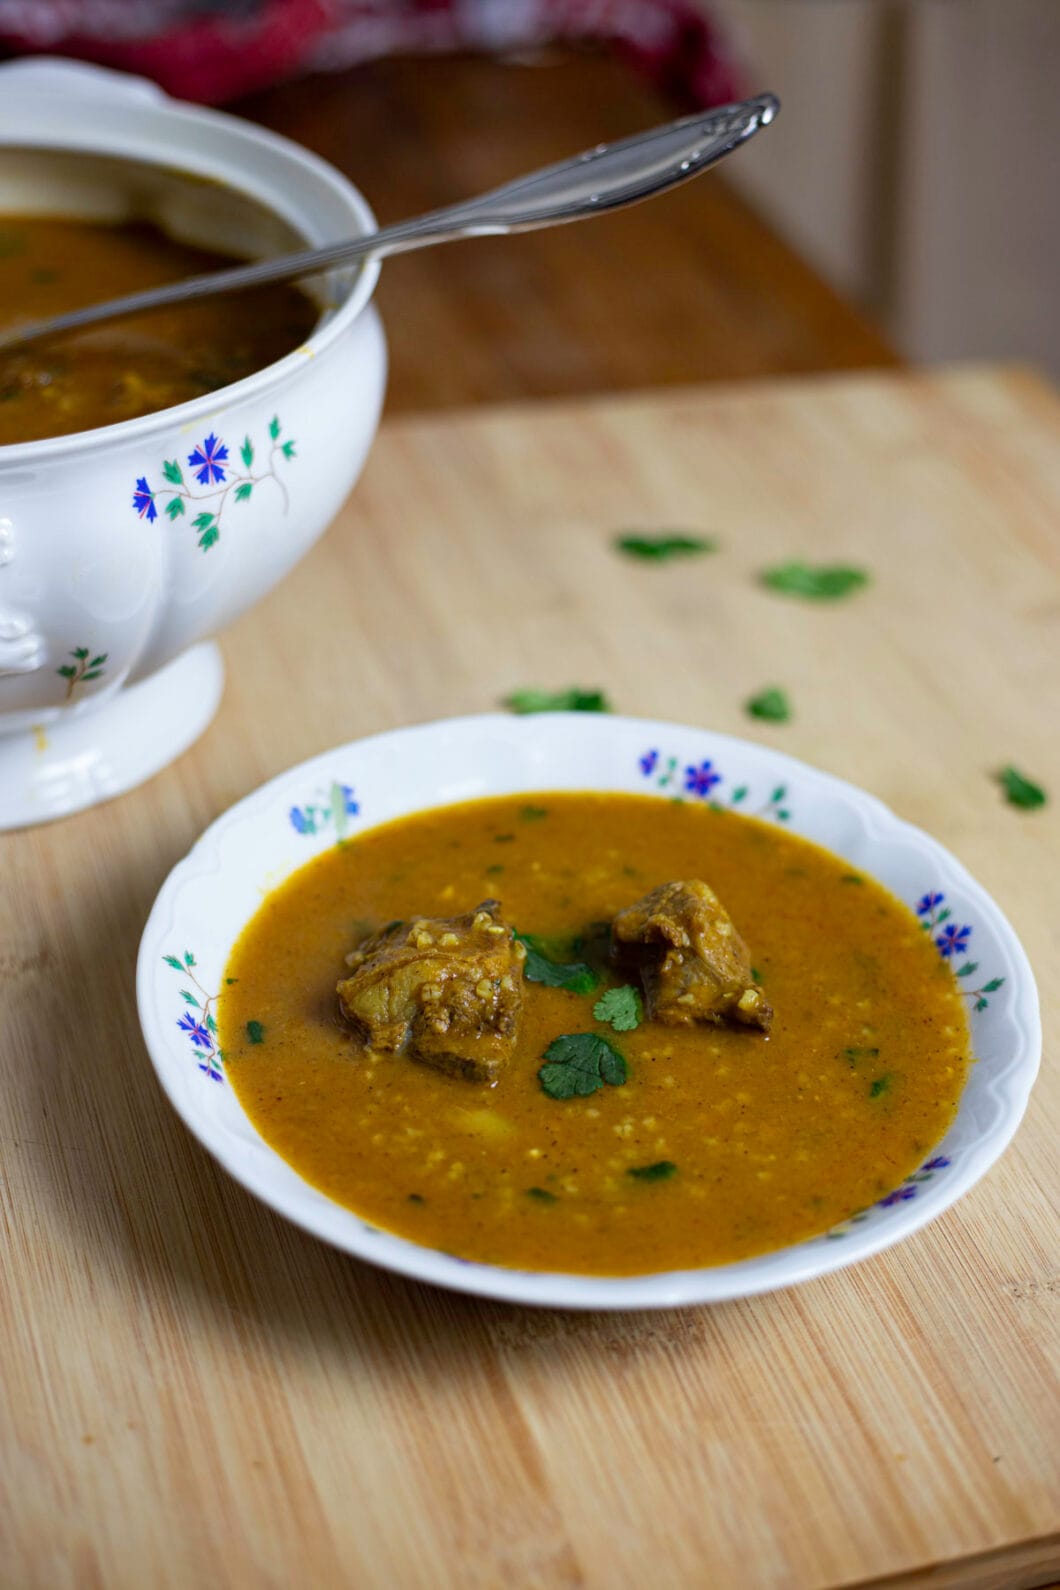 Bowl of orange soup (chorba frik) with cilantro